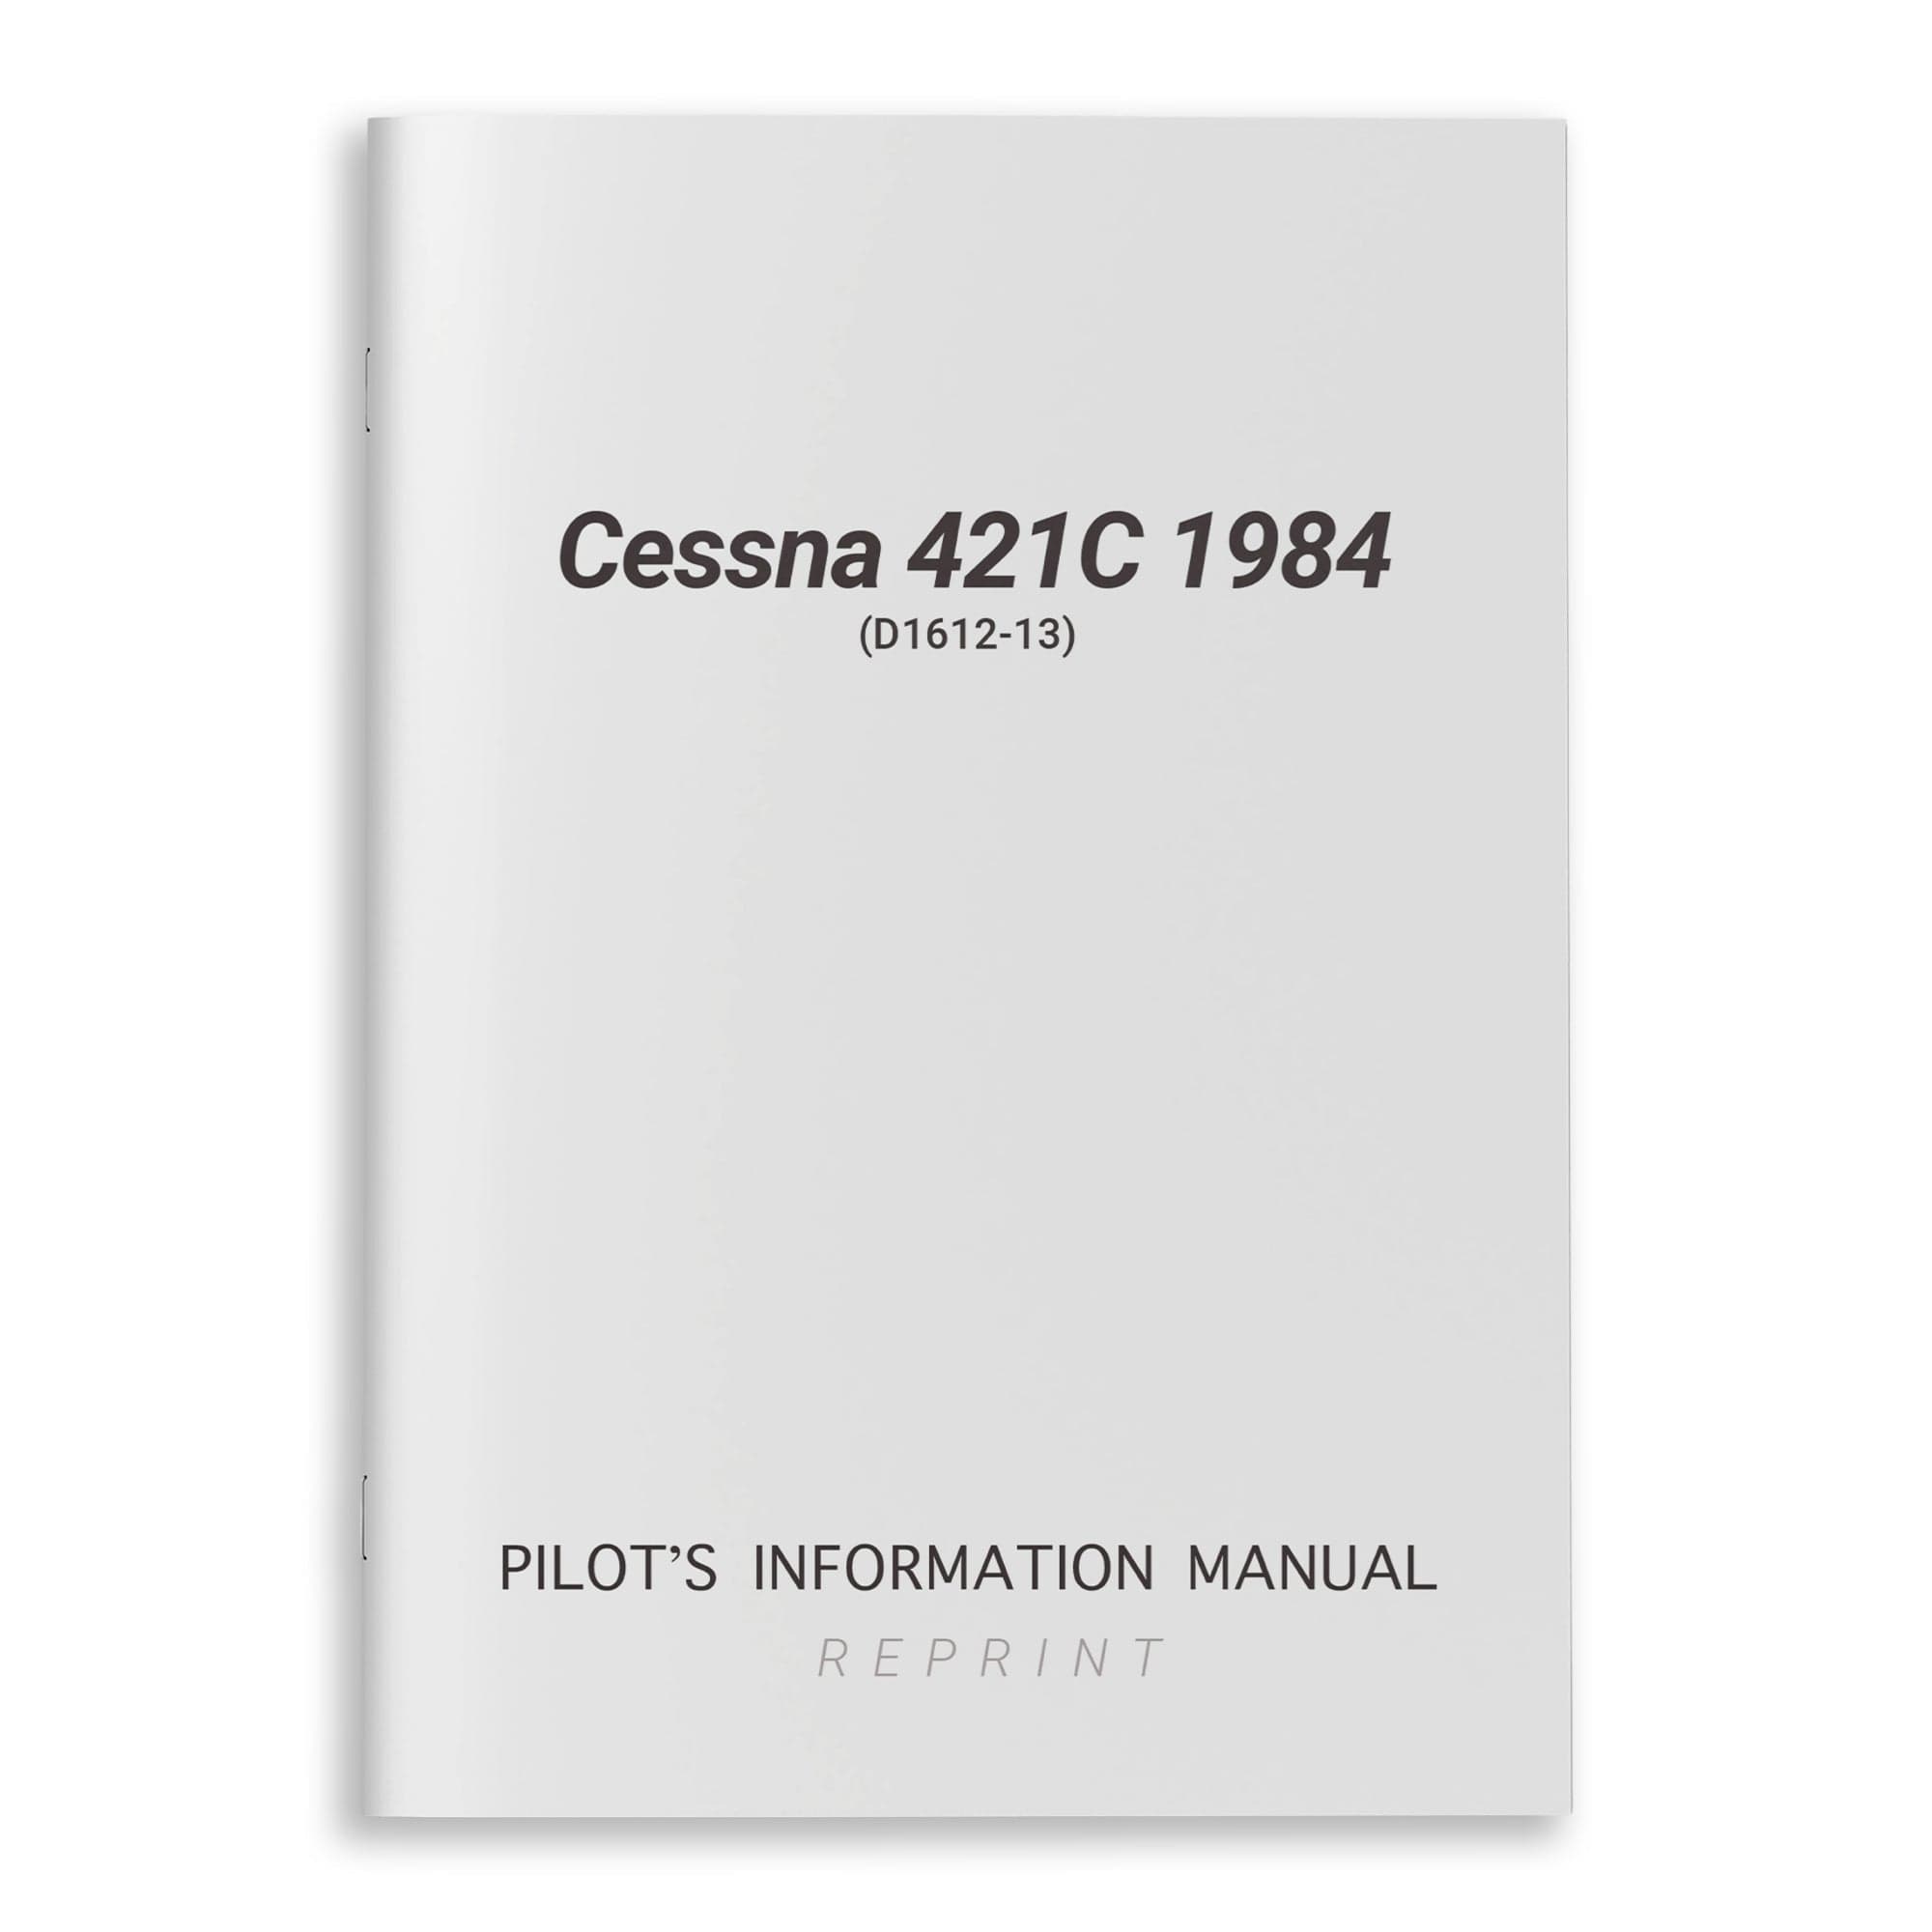 Cessna 421C 1984 Pilot's Information Manual (D1612-13)